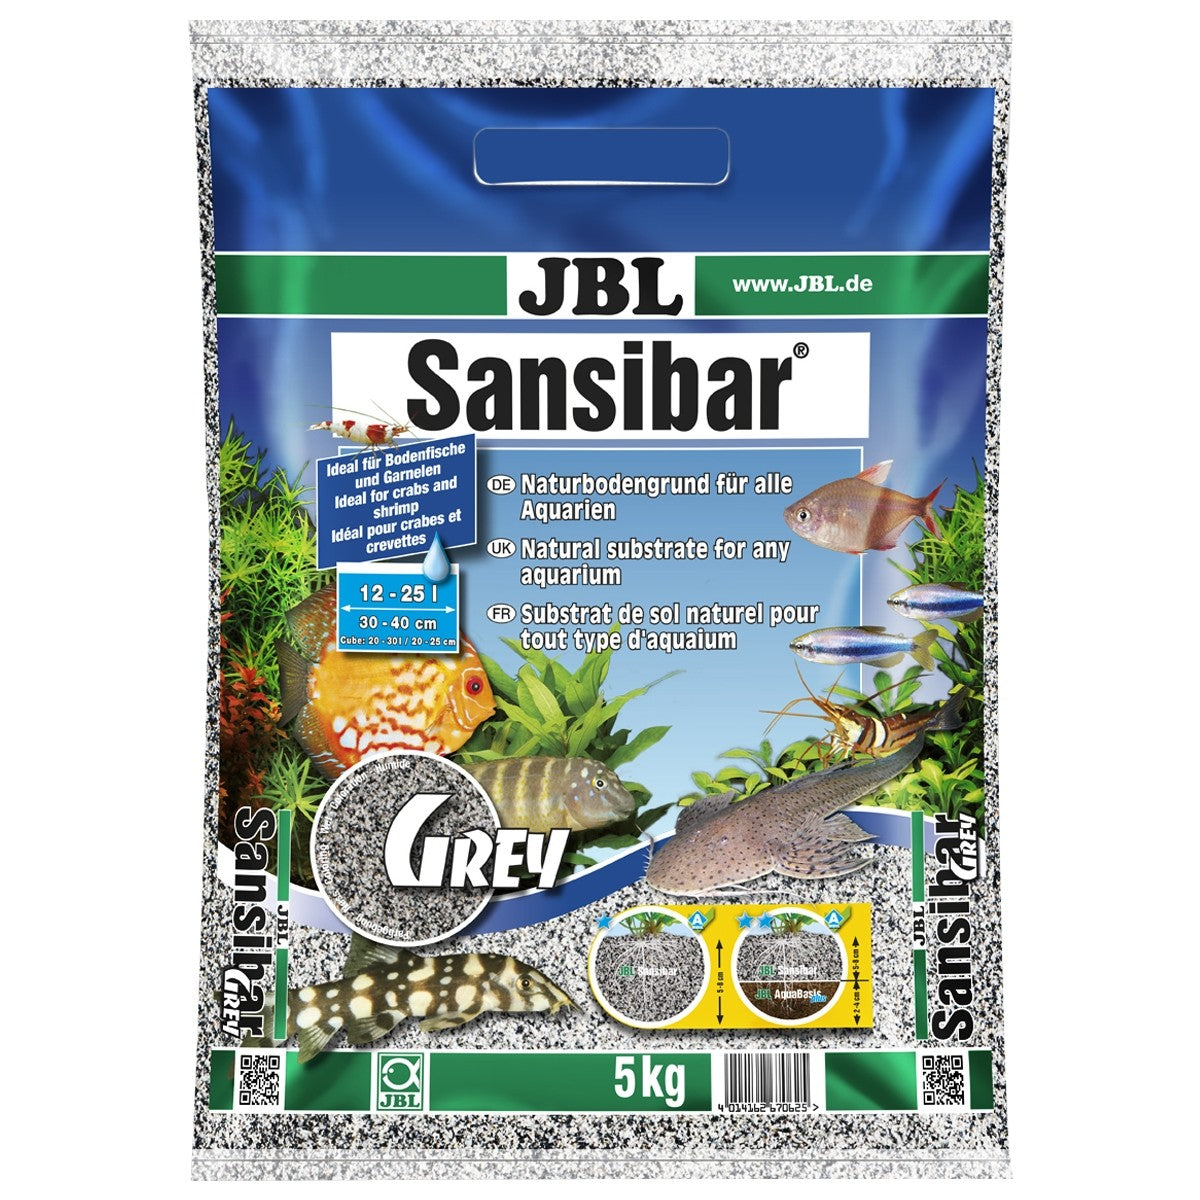 JBL Sansibar GRAY